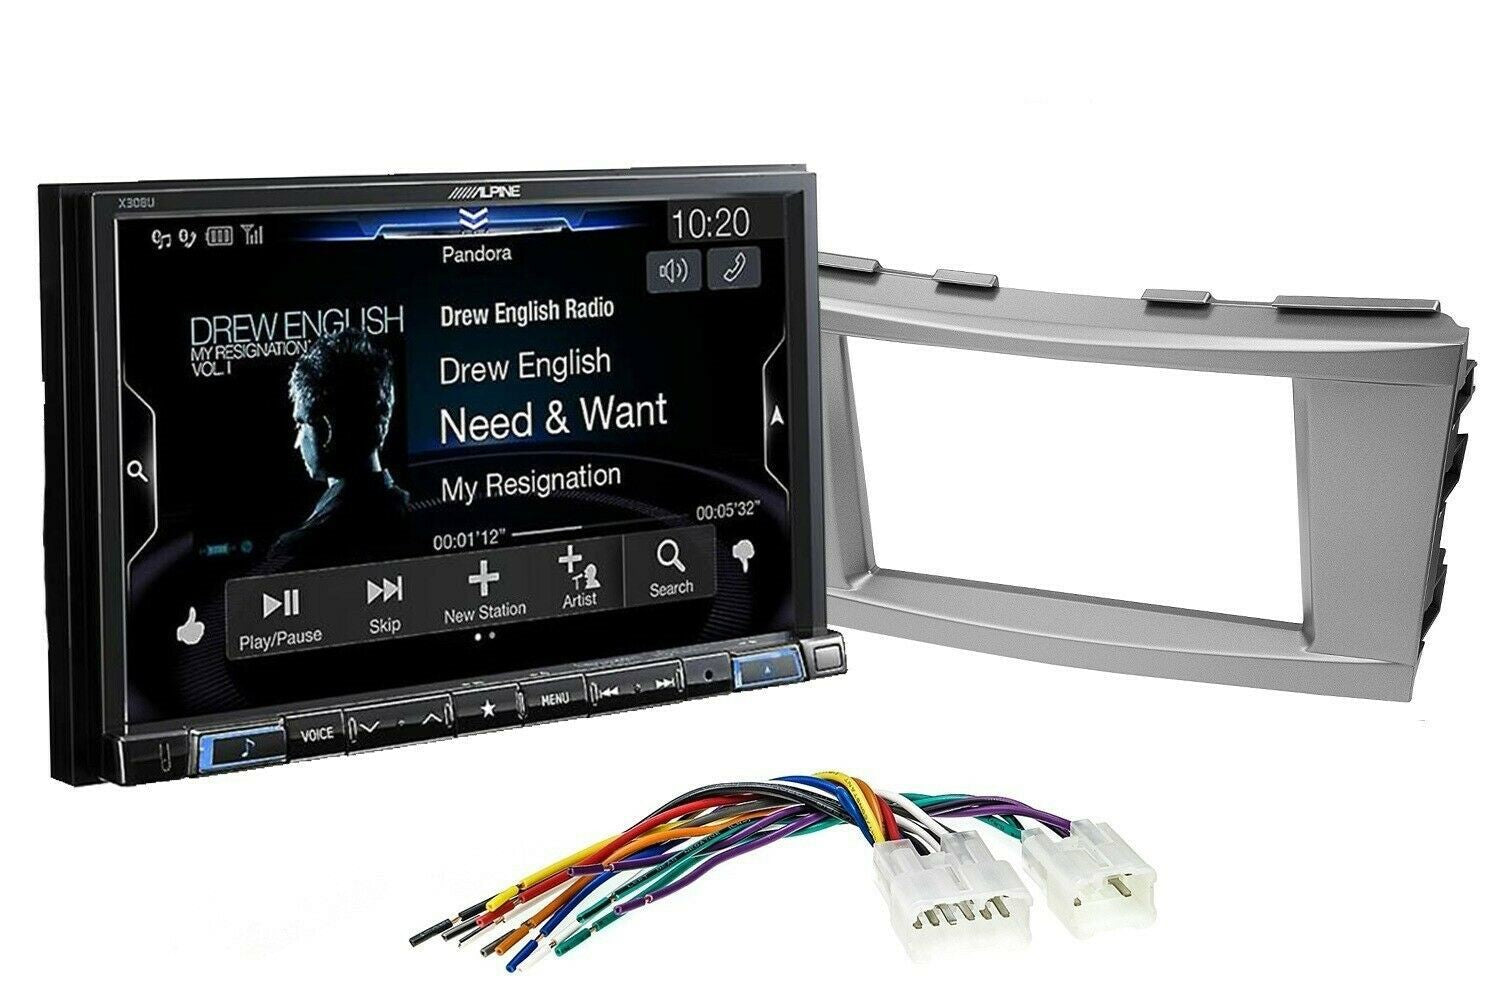 Alpine INE-W987HD Navigation, Apple CarPlay, & Android Auto Car Radio Stereo + install Kit for 2007-2011 Toyota Camry